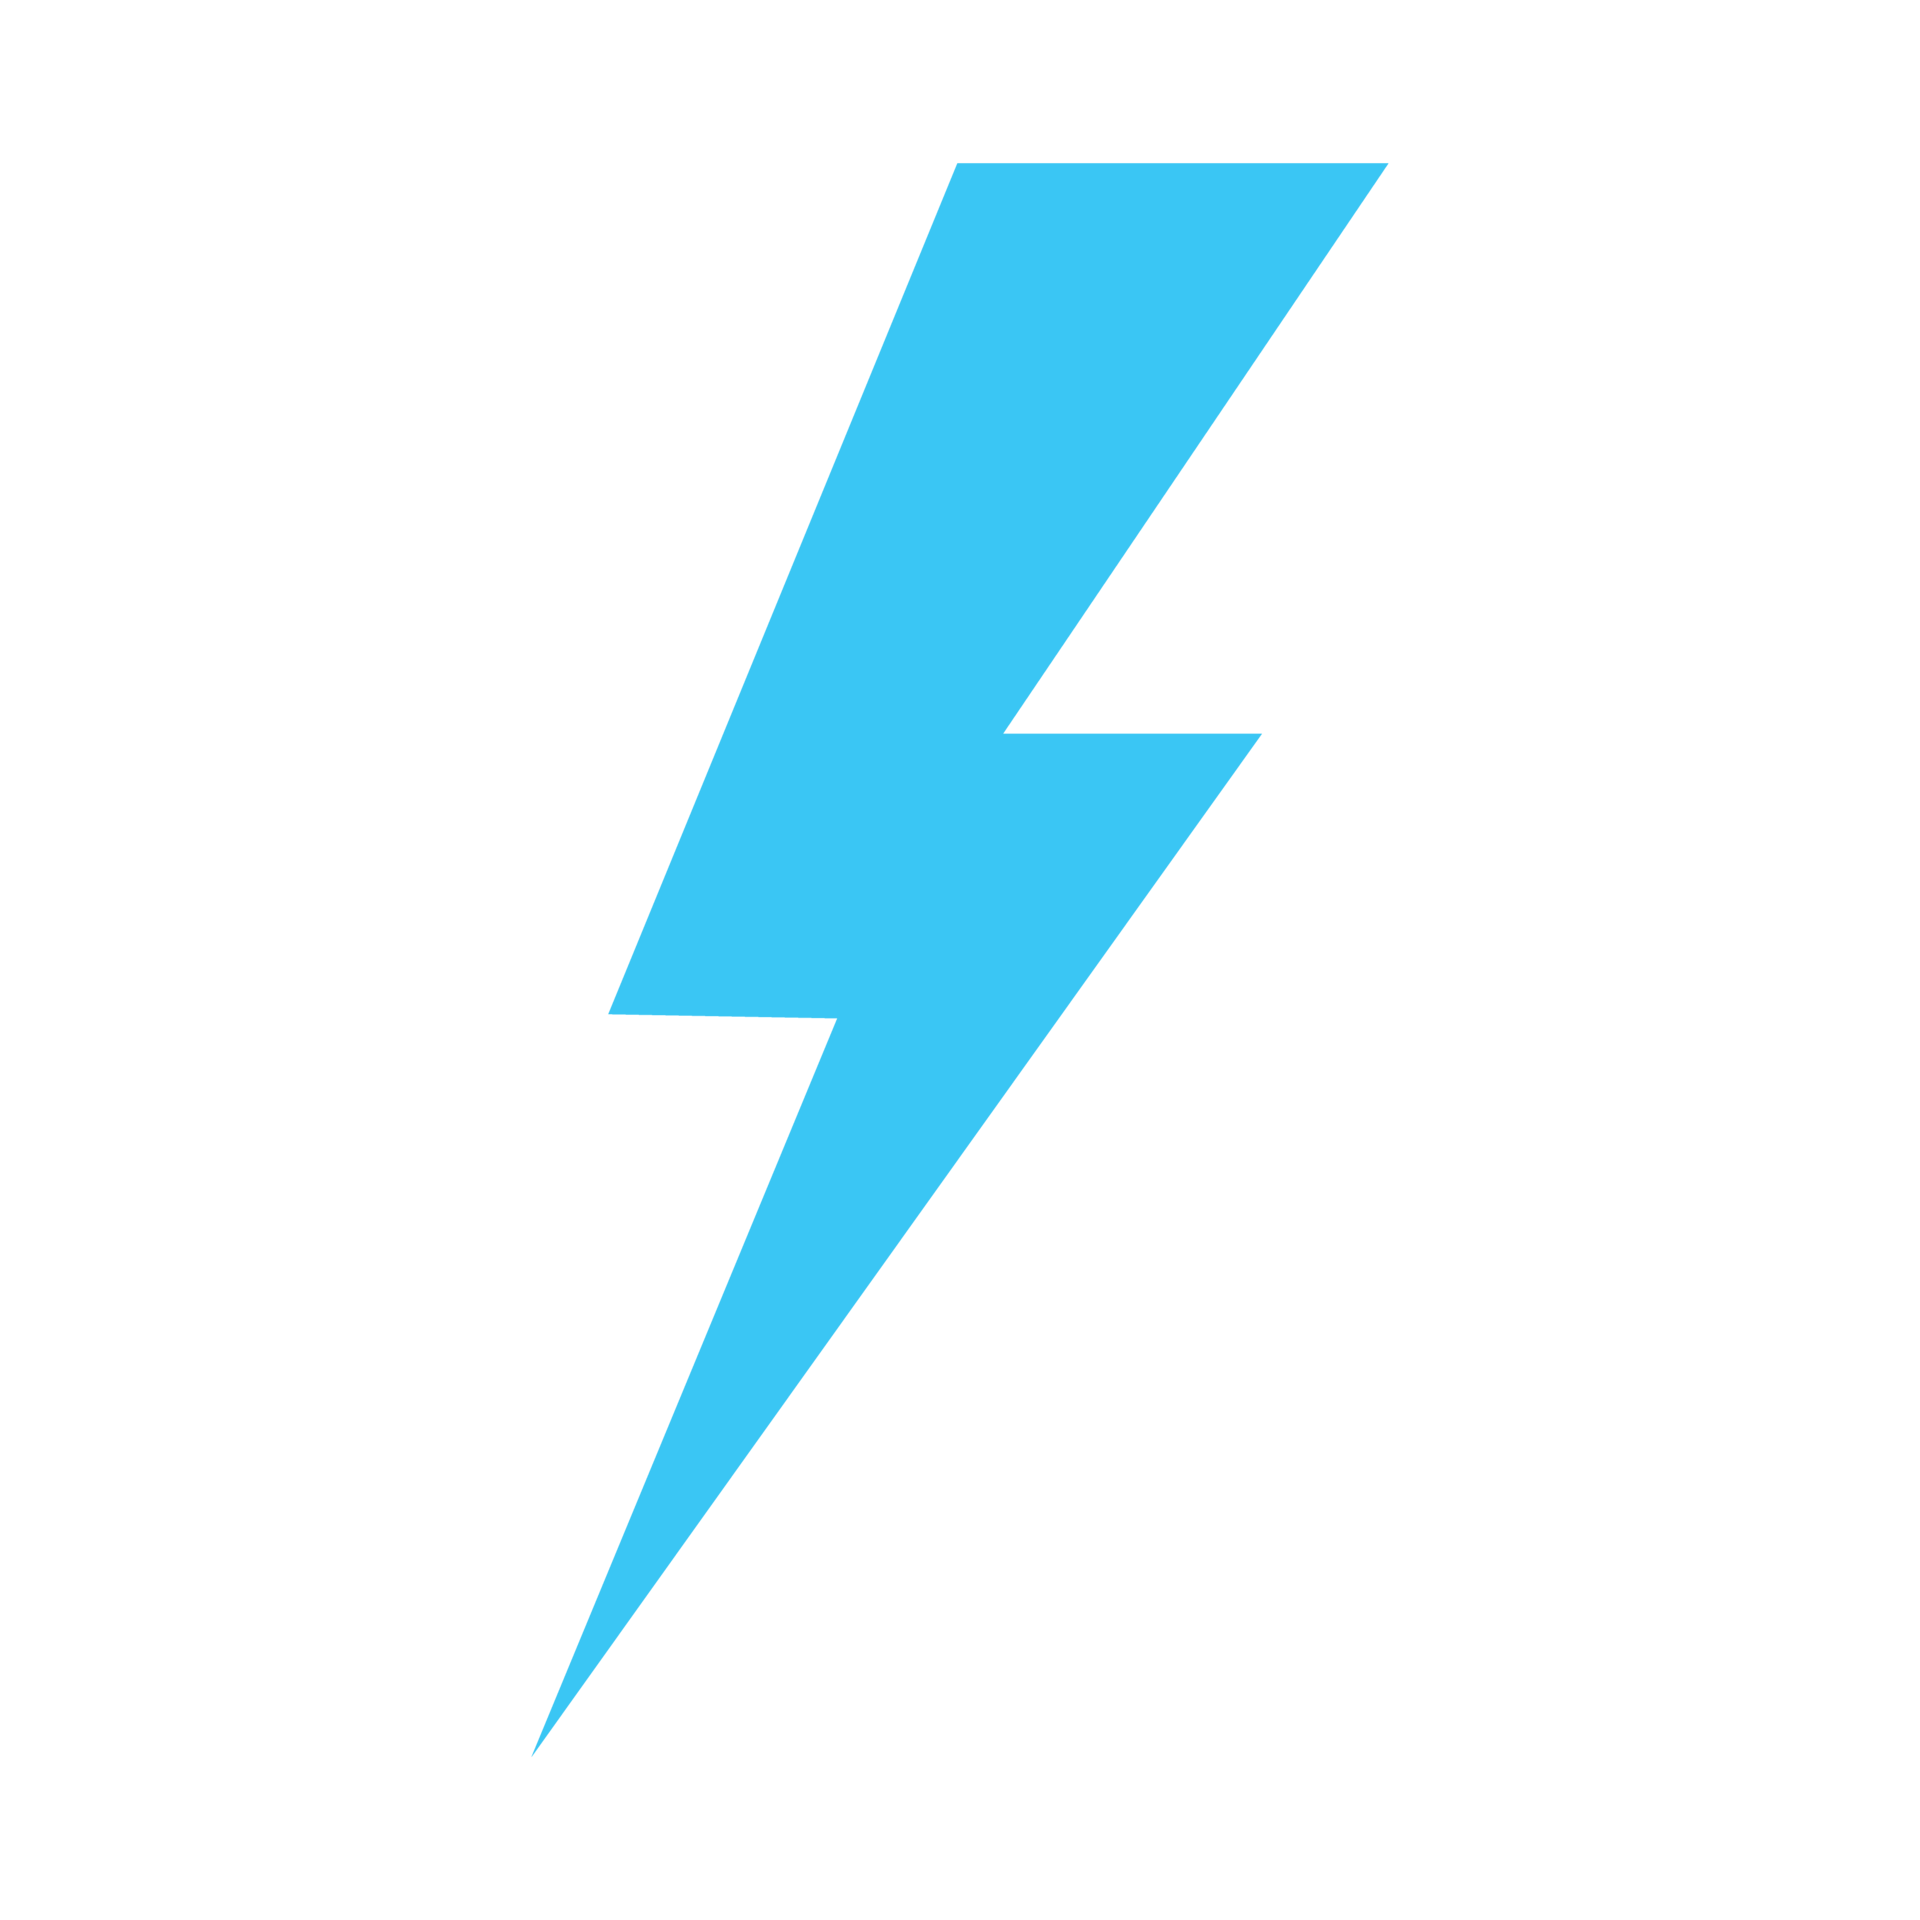 Free Blue Energy thunder lightning bolt symbol or electricity power ...